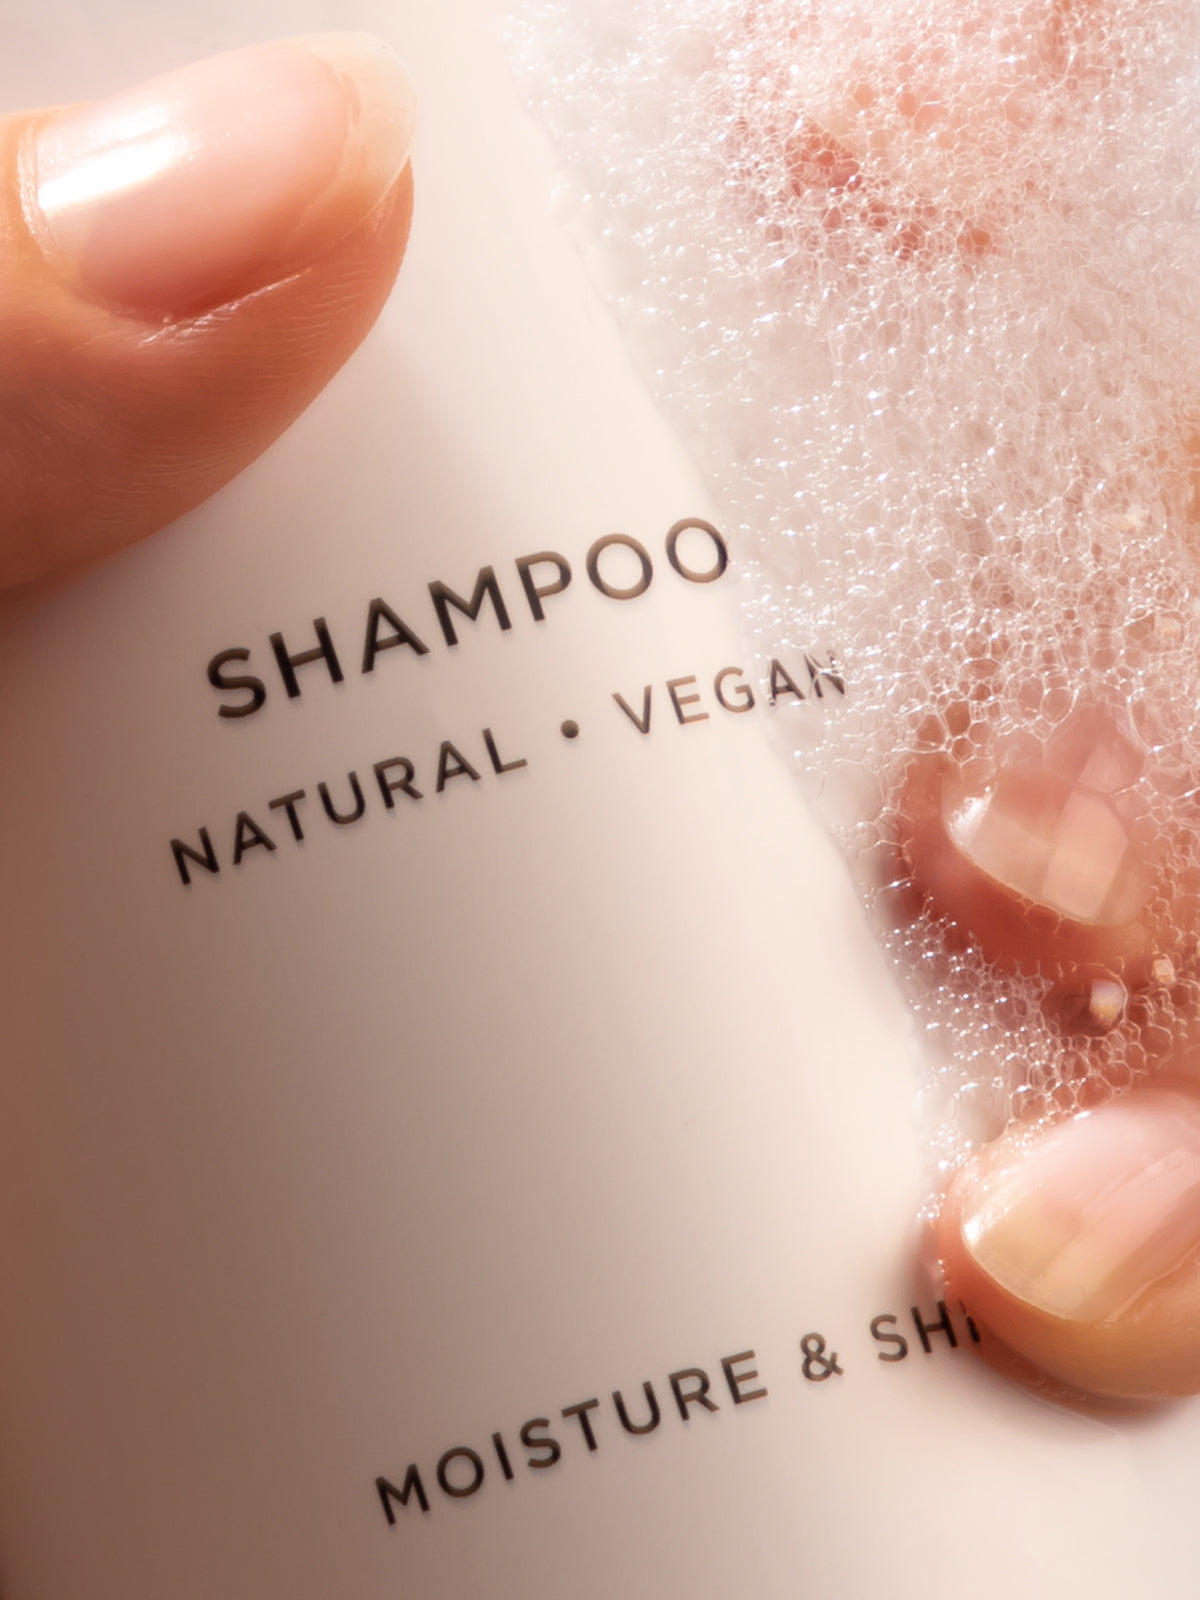 Shampooing NUI Natural & vegan